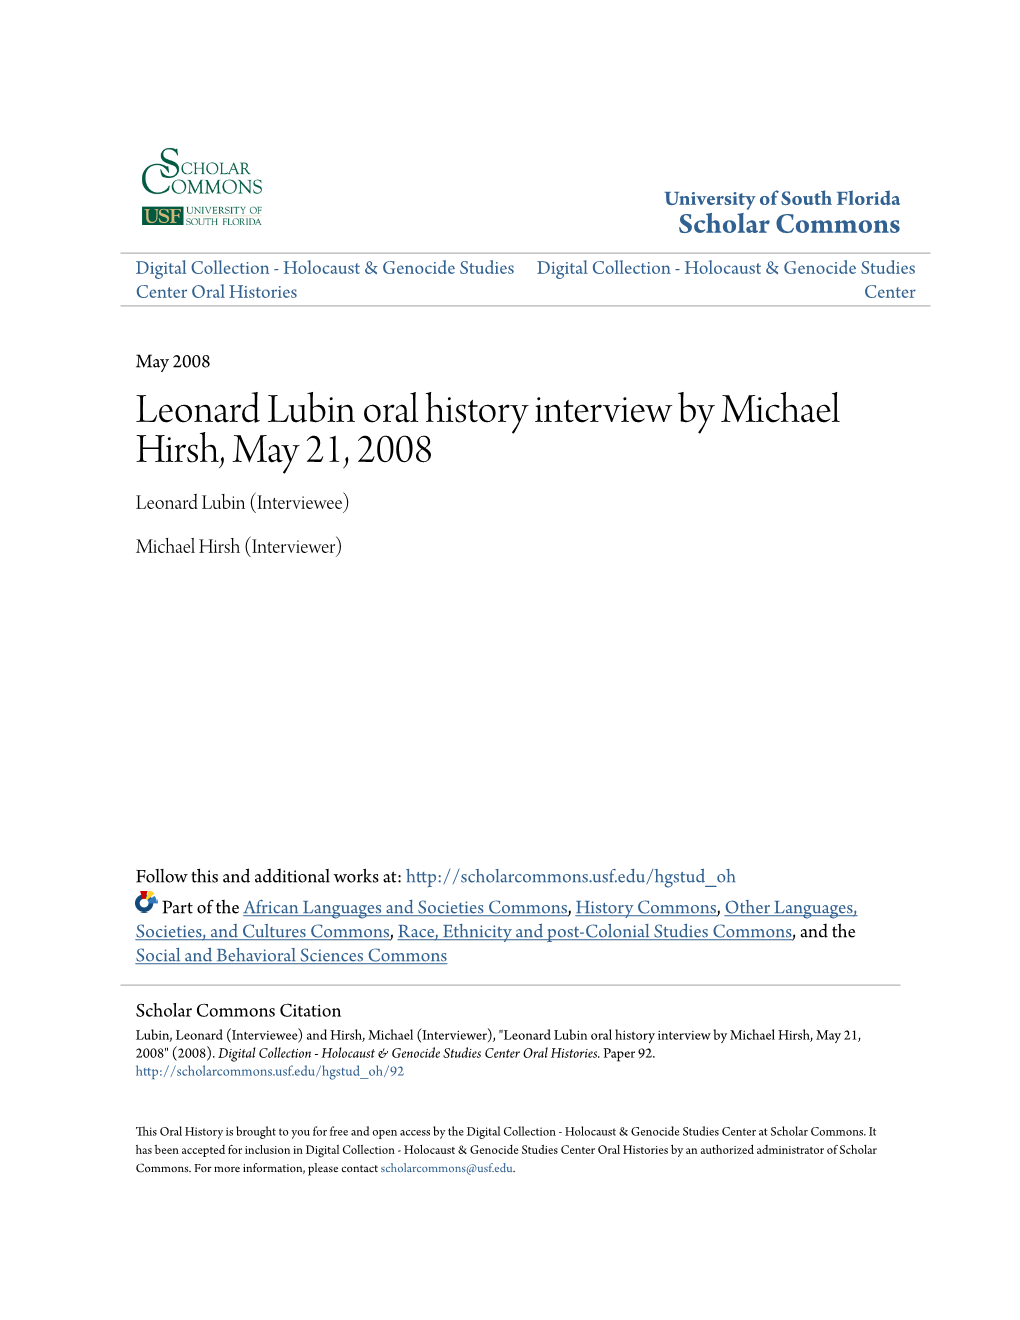 Leonard Lubin Oral History Interview by Michael Hirsh, May 21, 2008 Leonard Lubin (Interviewee)